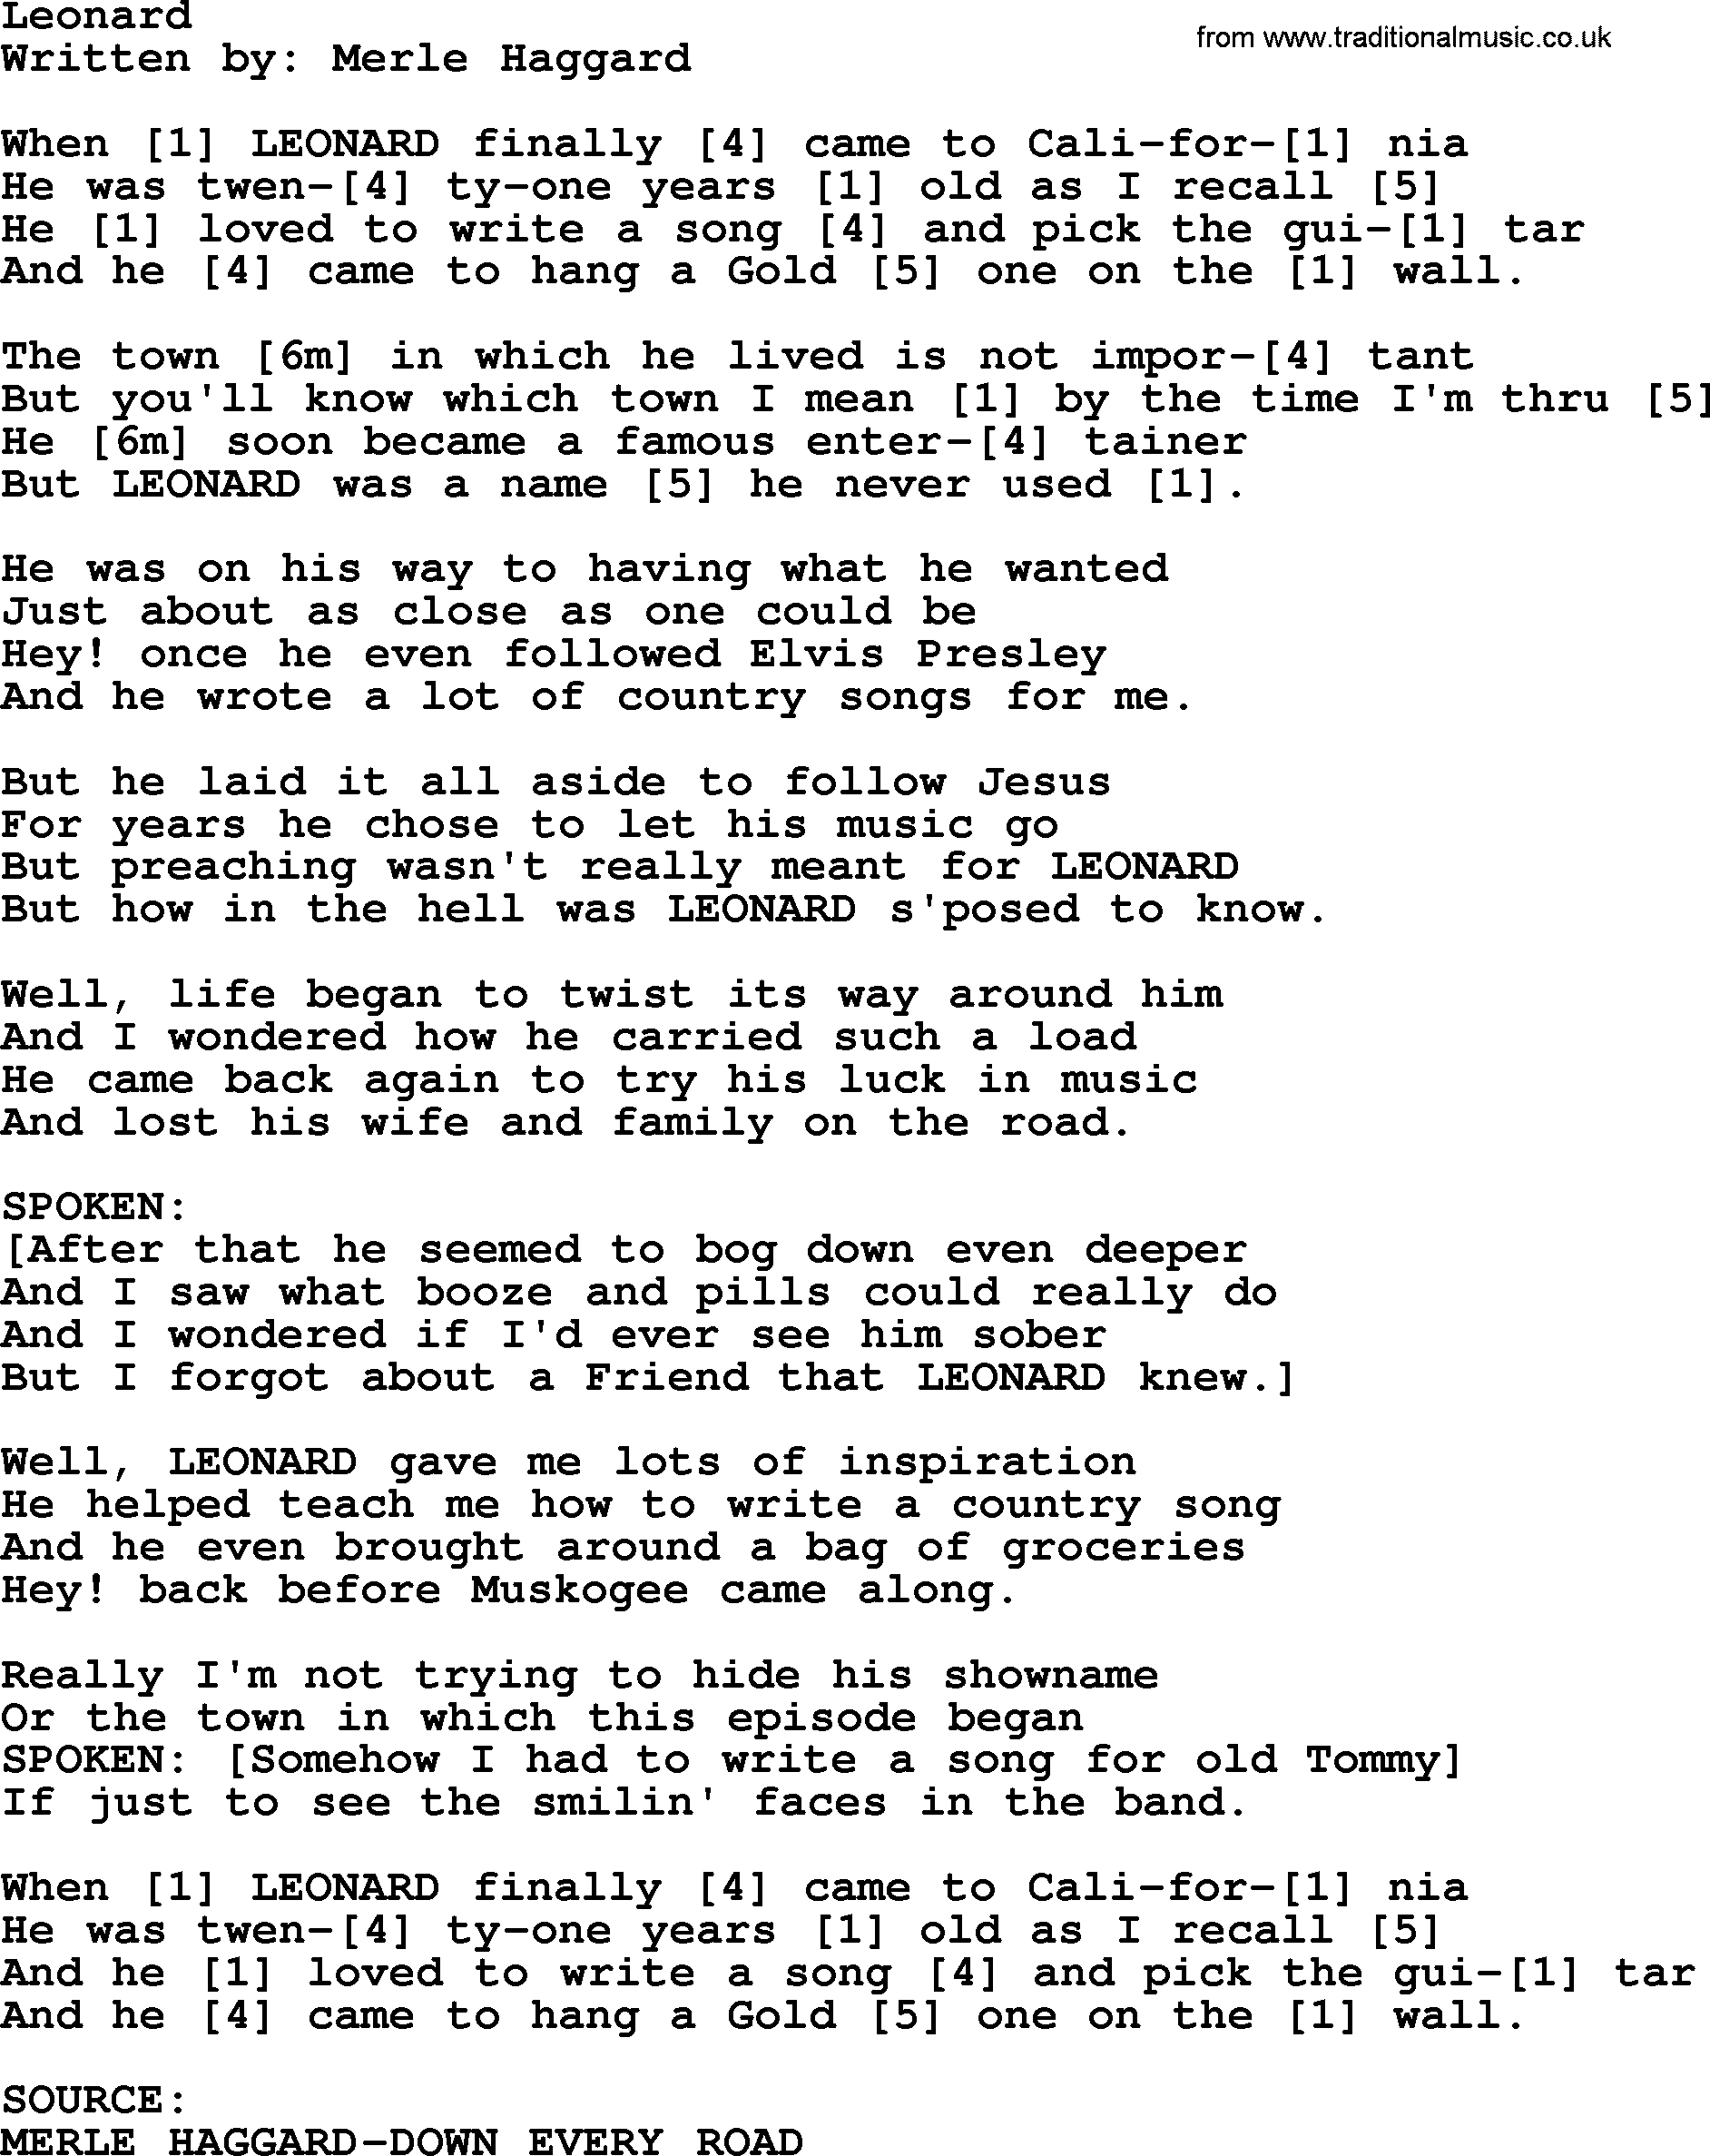 Merle Haggard song: Leonard, lyrics and chords